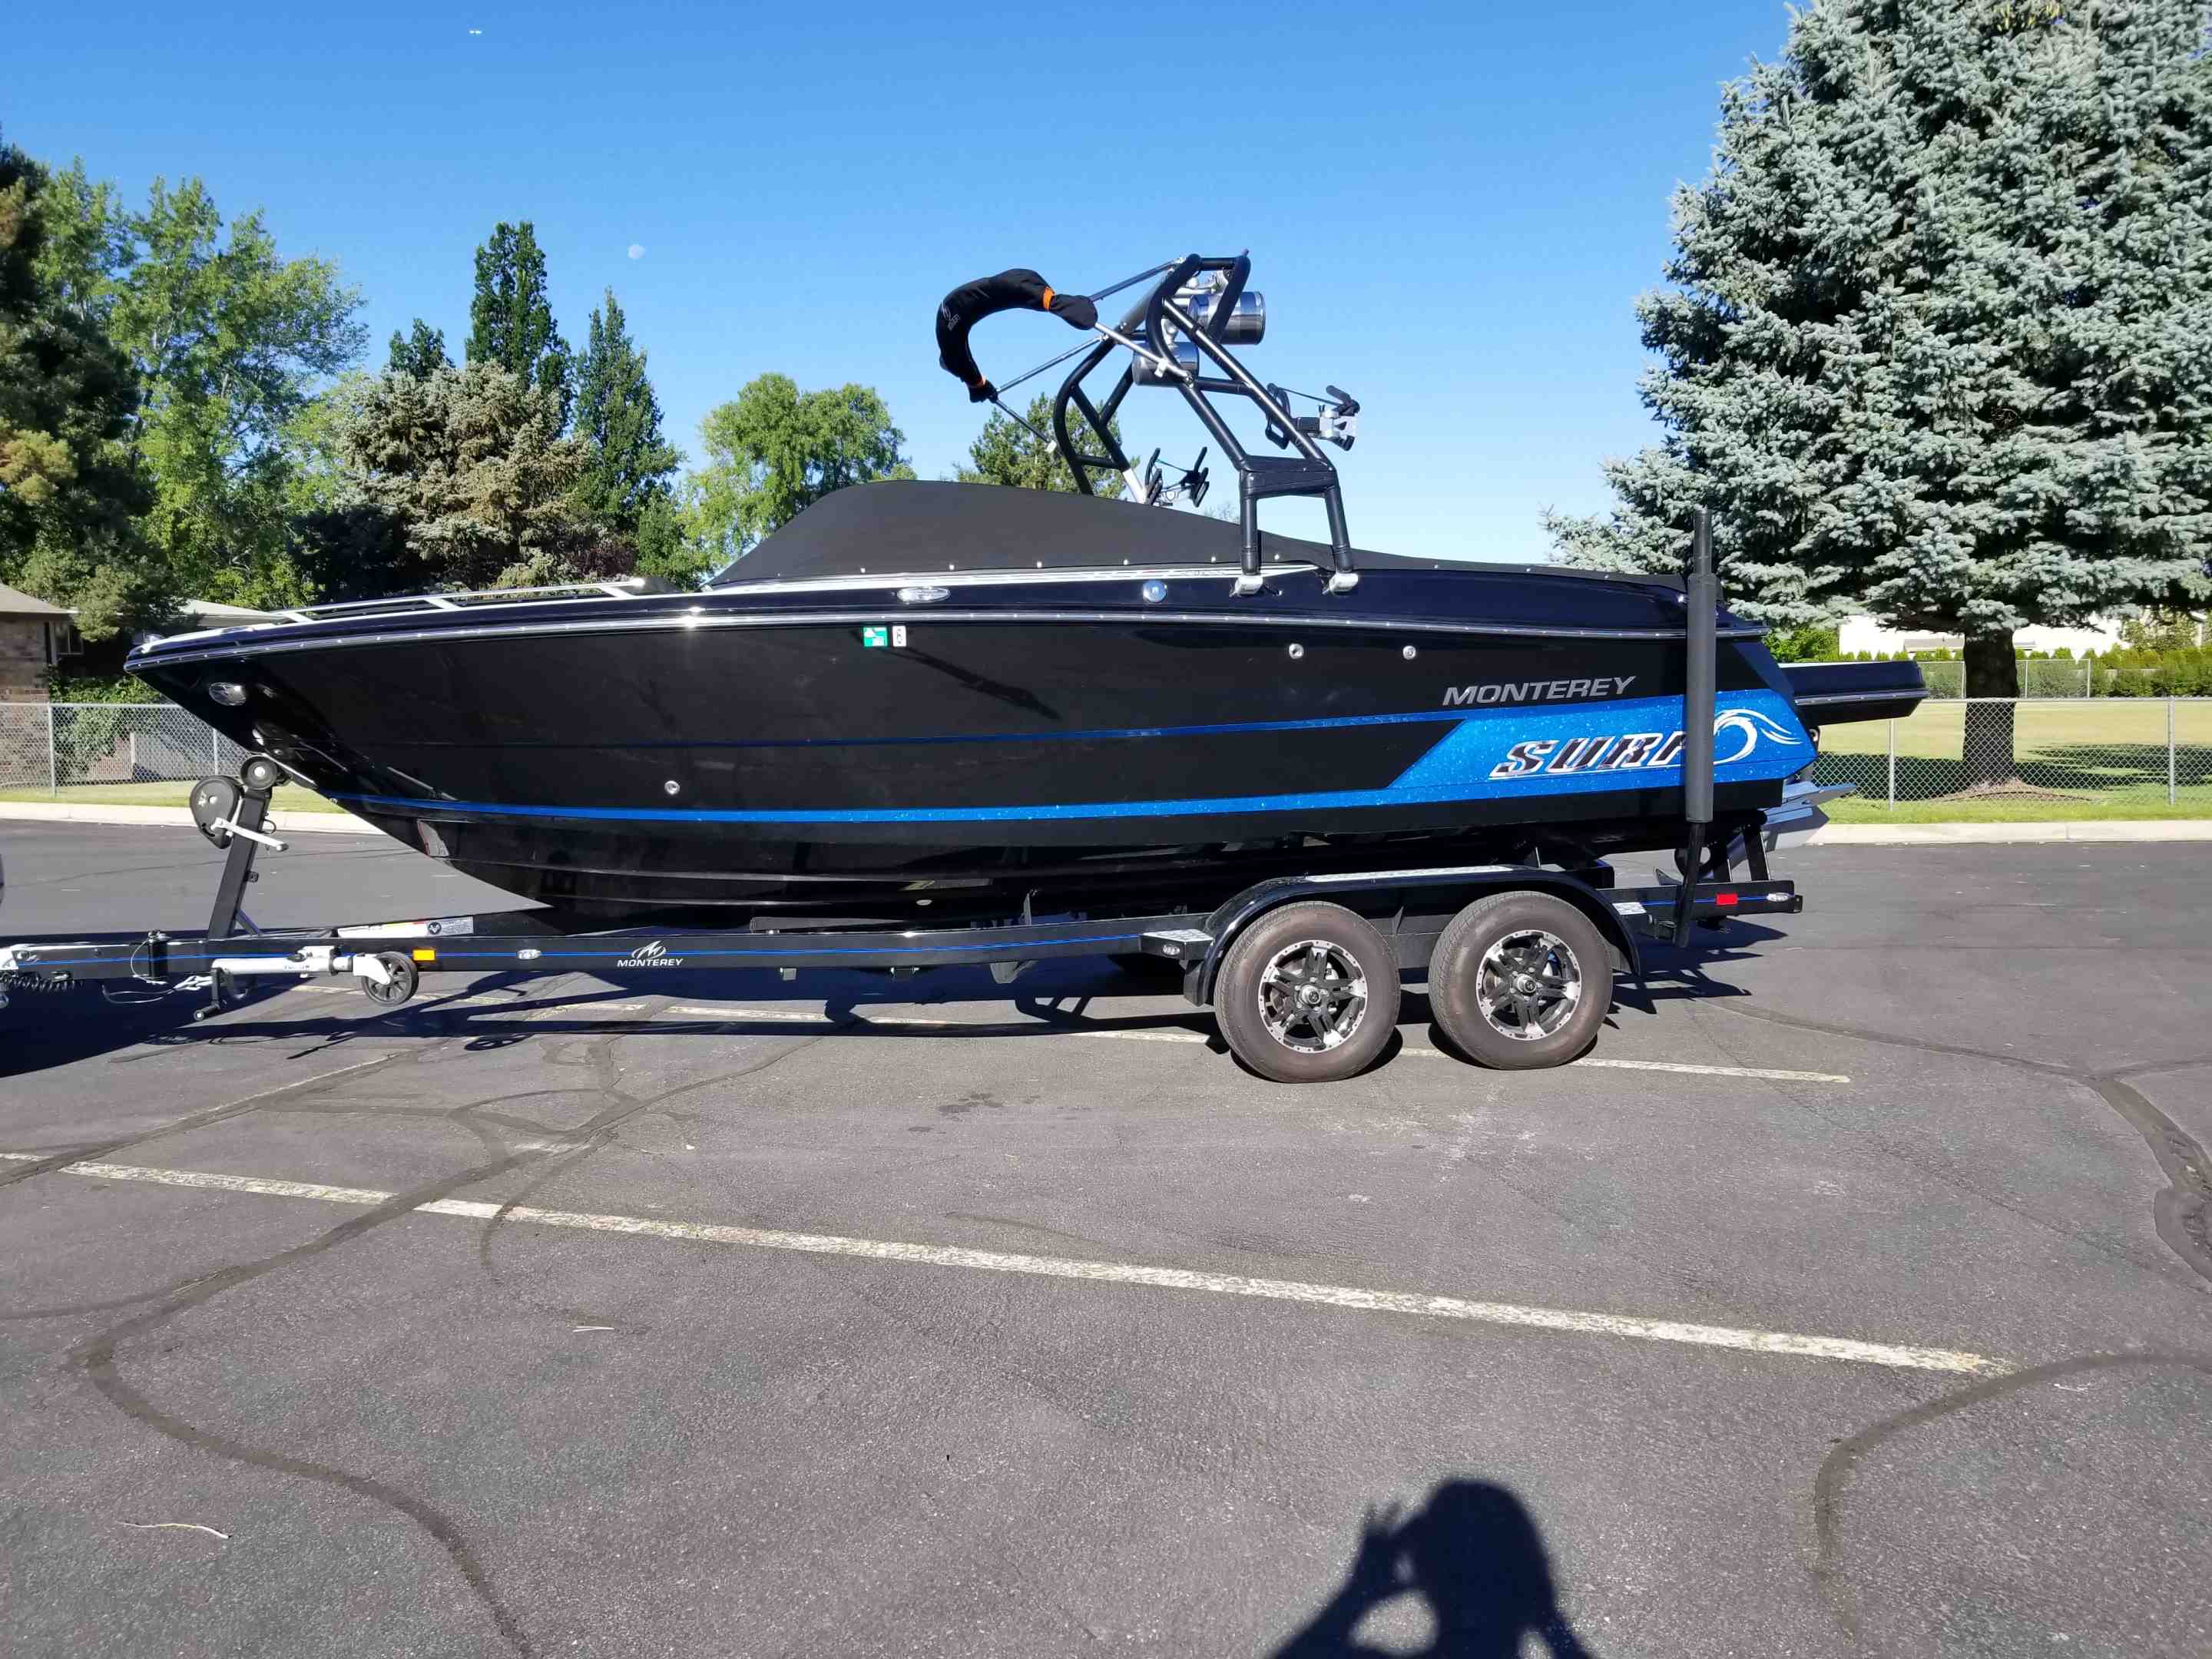  boat rentals Utah SANDY Utah  Monterey 238 surf edition 2018 23 